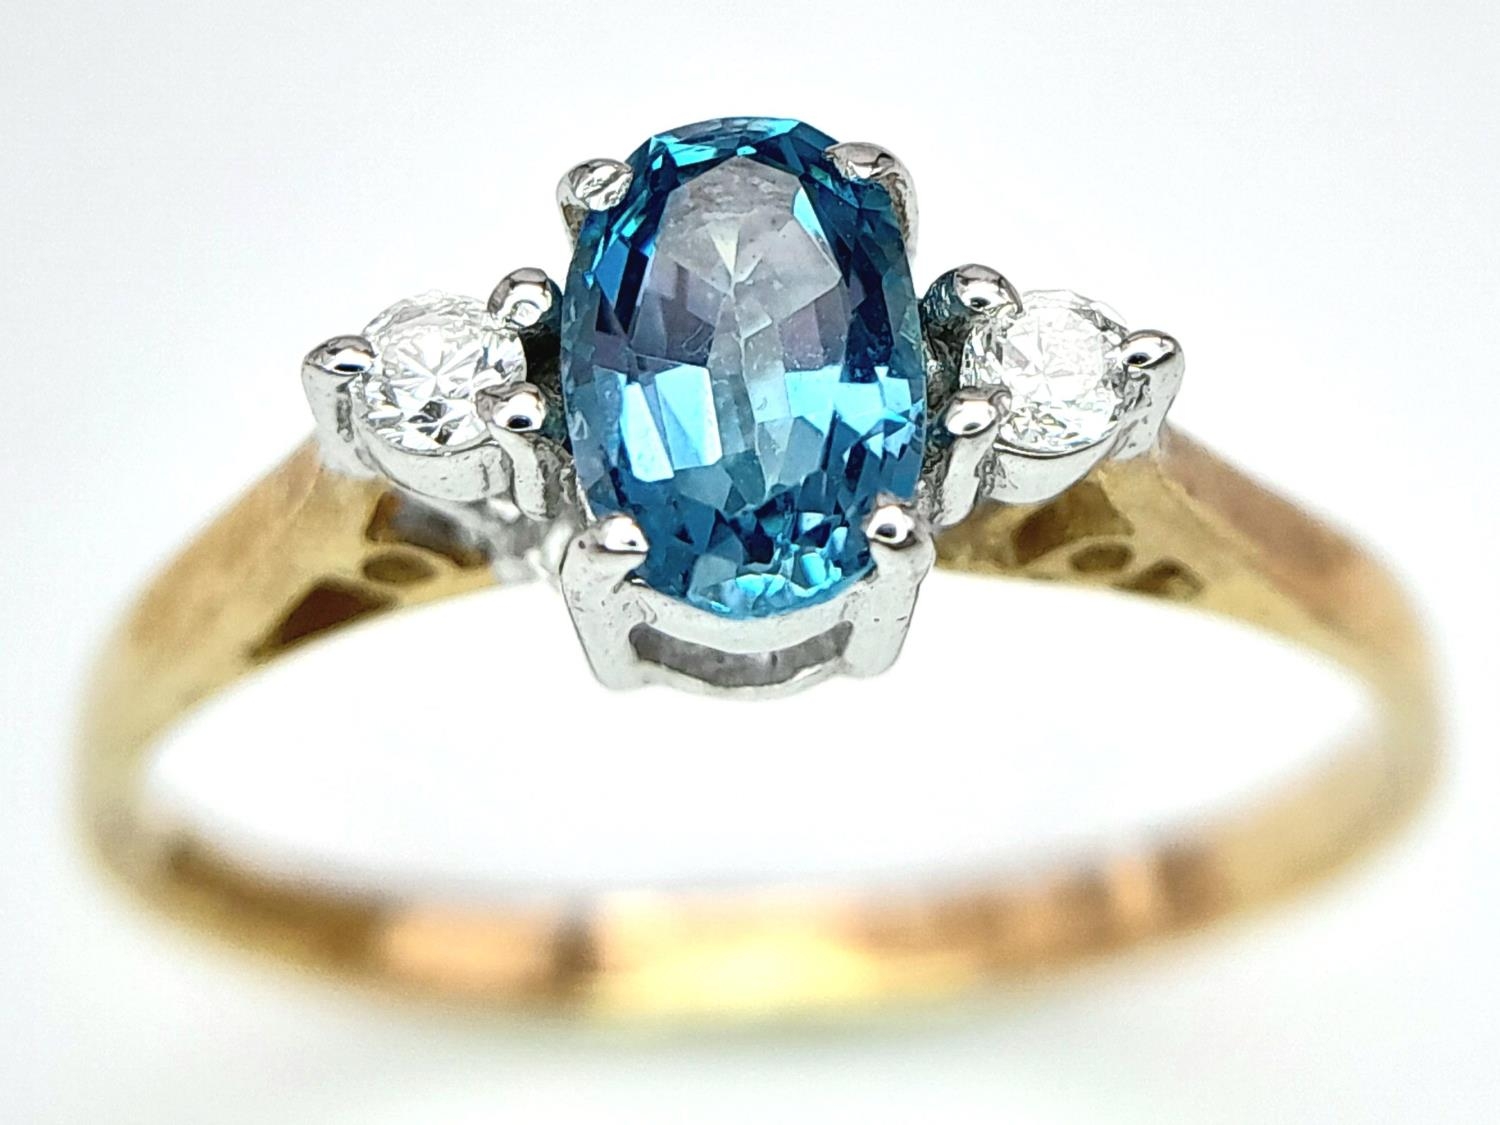 A 9K YELLOW GOLD DIAMOND & BLUE TOPAZ 3 STONE RING 1.4G SIZE M. ref: SPAS 9012 - Image 3 of 5